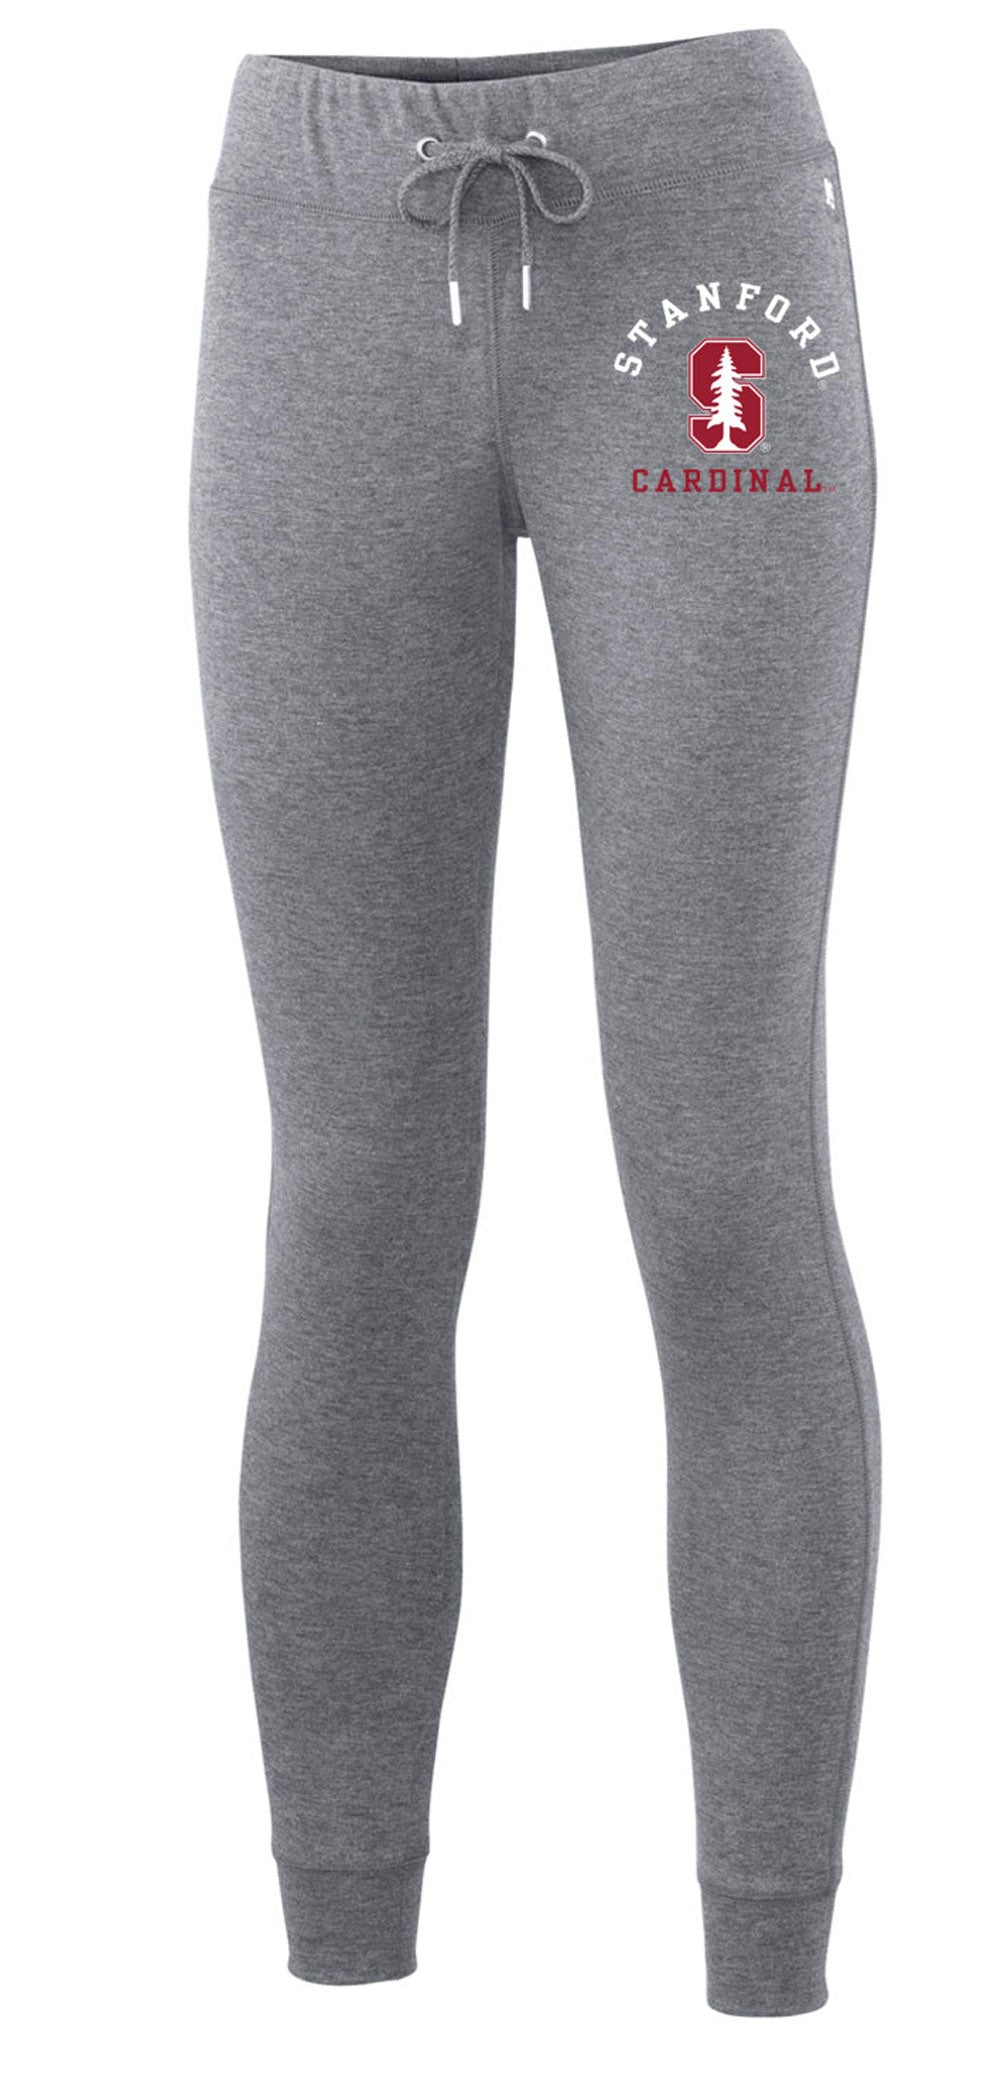 Stanford Cardinal Women's Legging-Gray – Shop College Wear